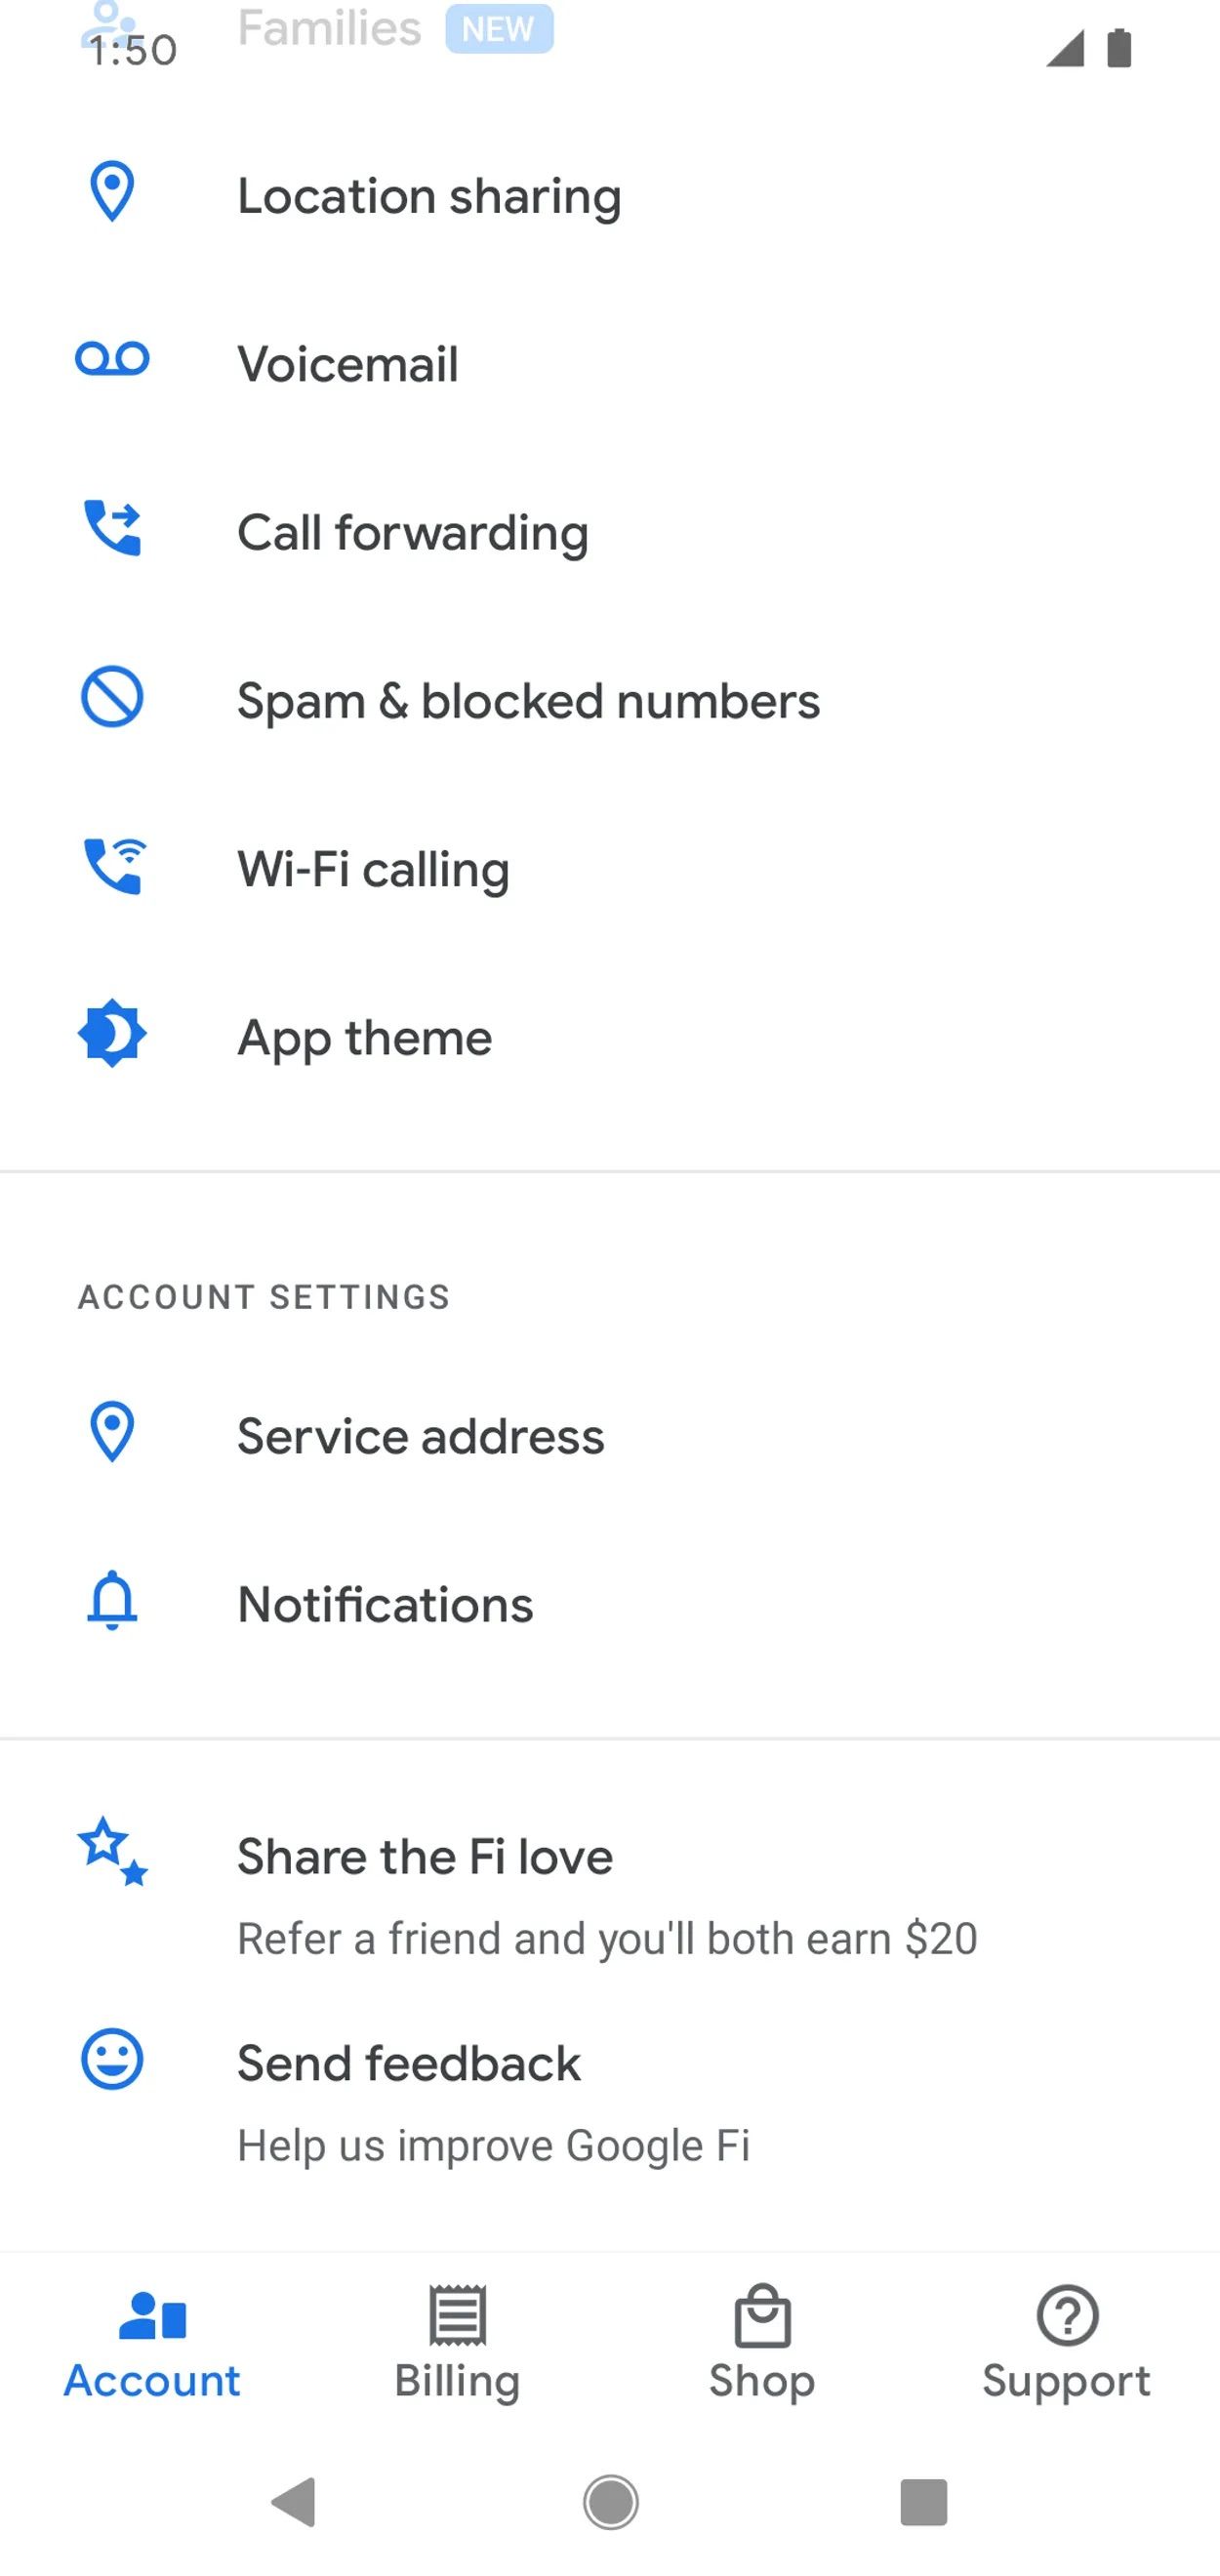 Google Fi Call forwarding account